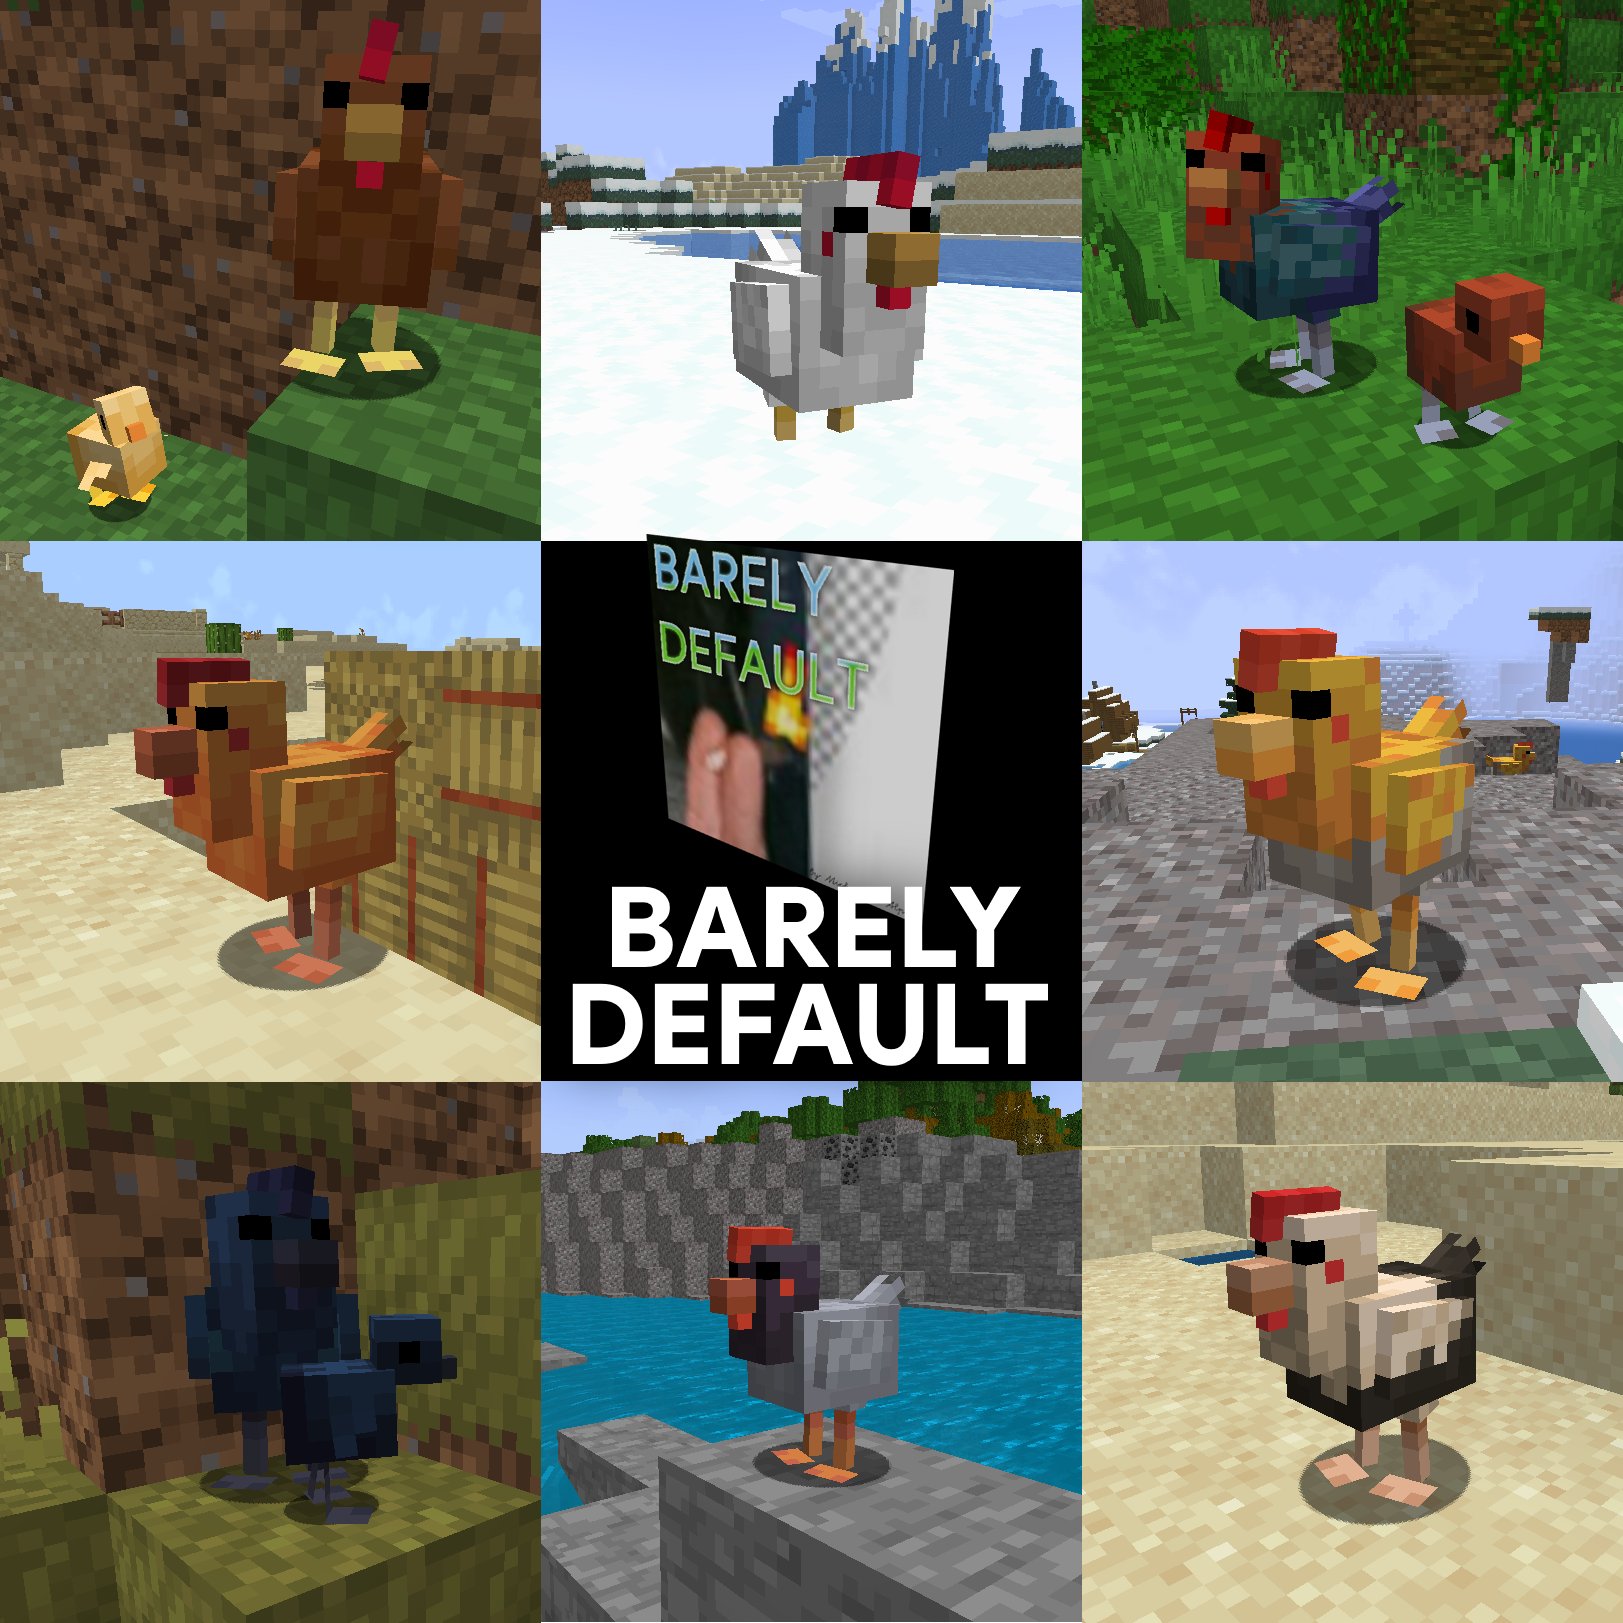 Chicken variants based on Minecraft Earth